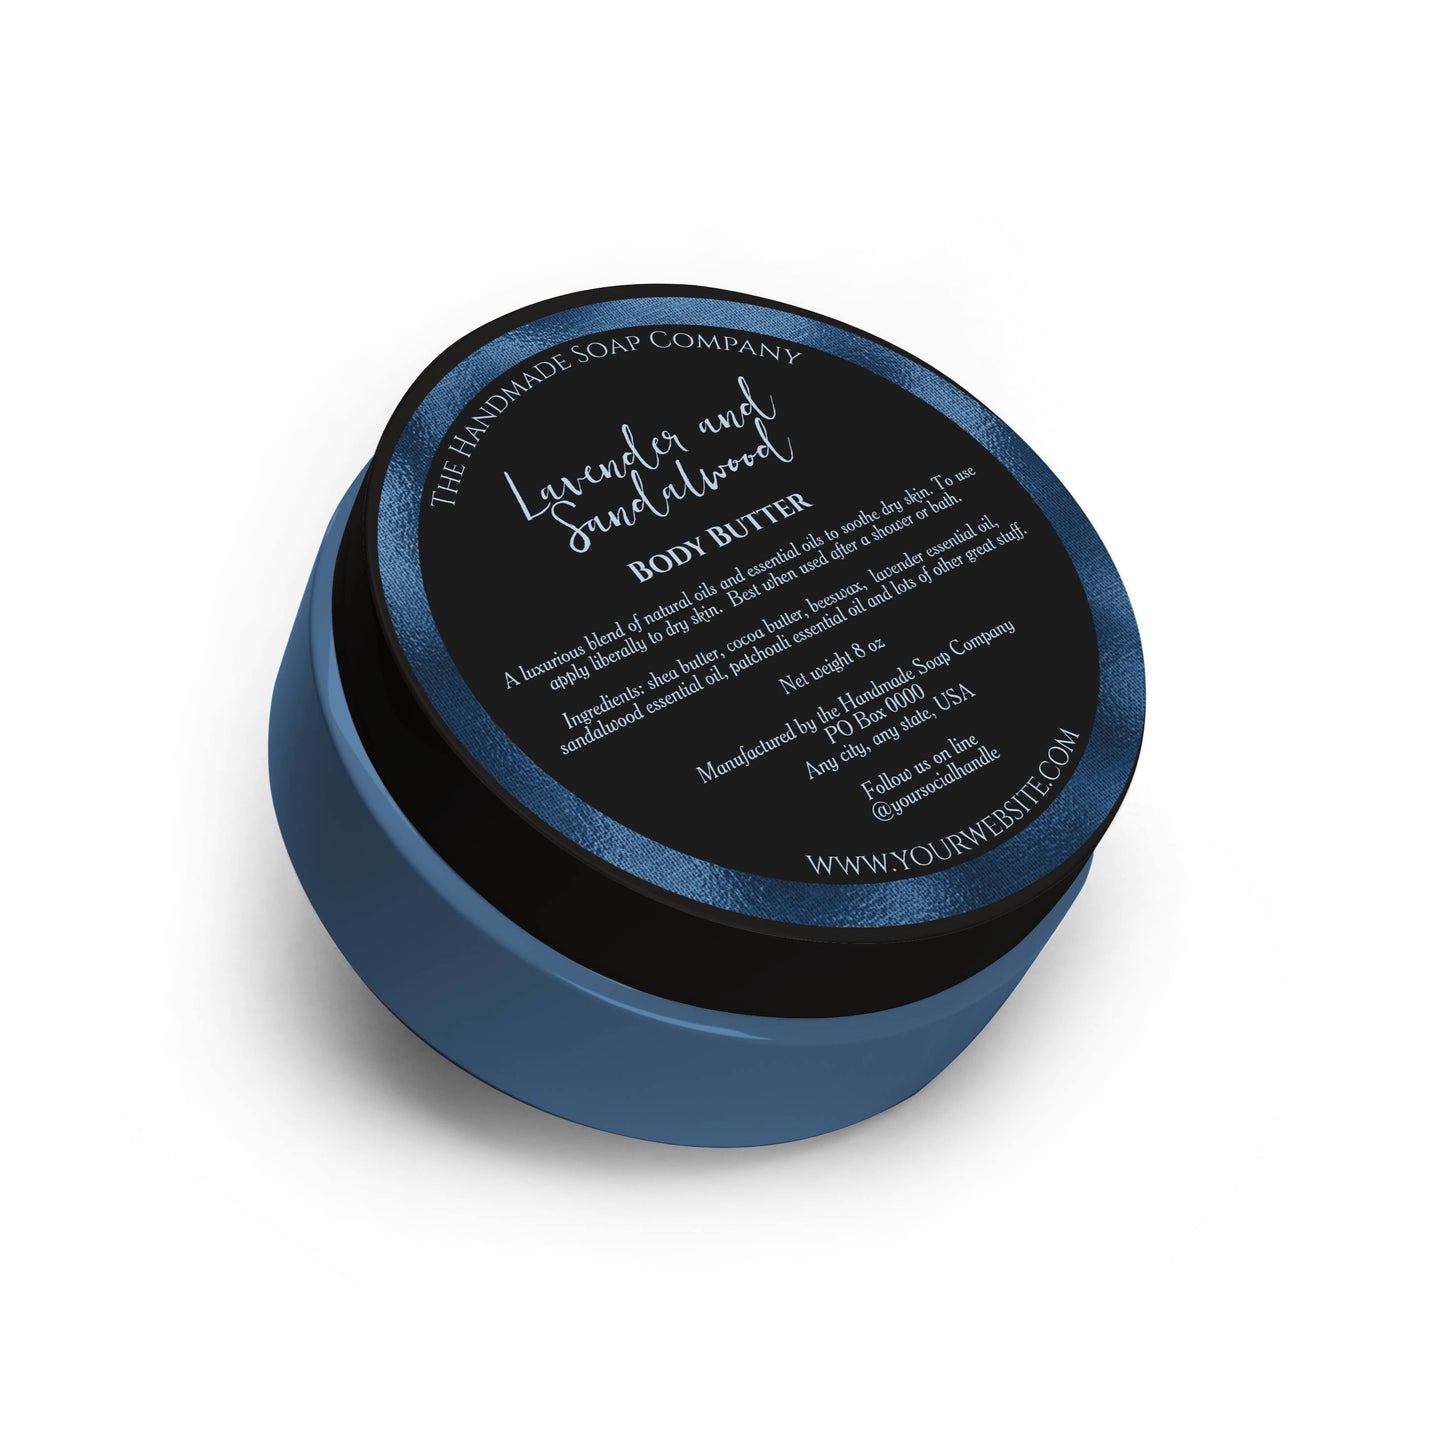 Black and Blue Cosmetics Jar Label with Ingredients - 3” diameter